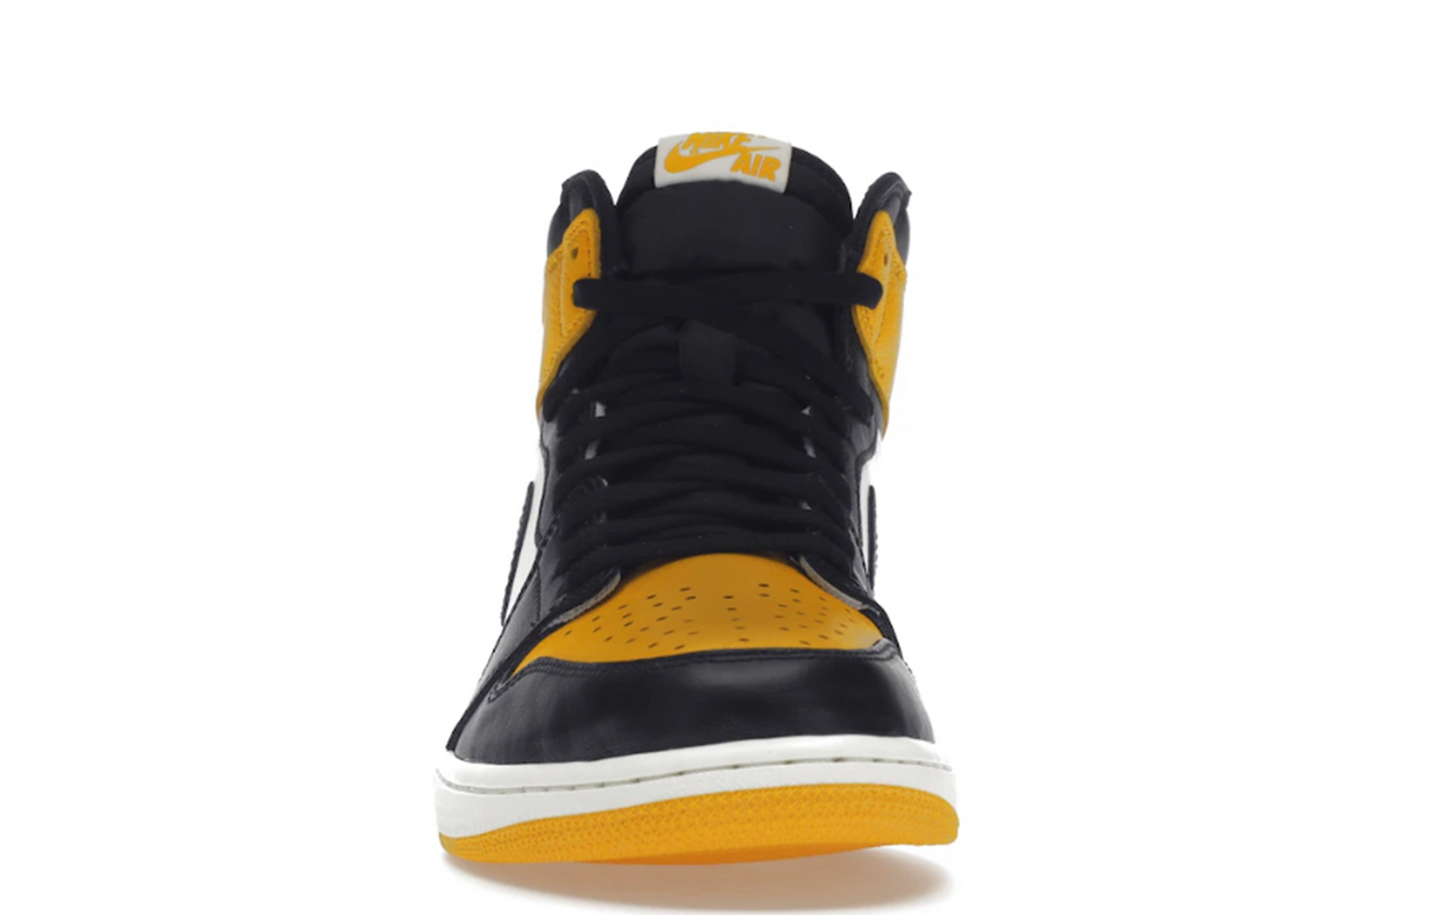 Nike Jordan 1 Retro High OG Yellow Toe "Taxi"